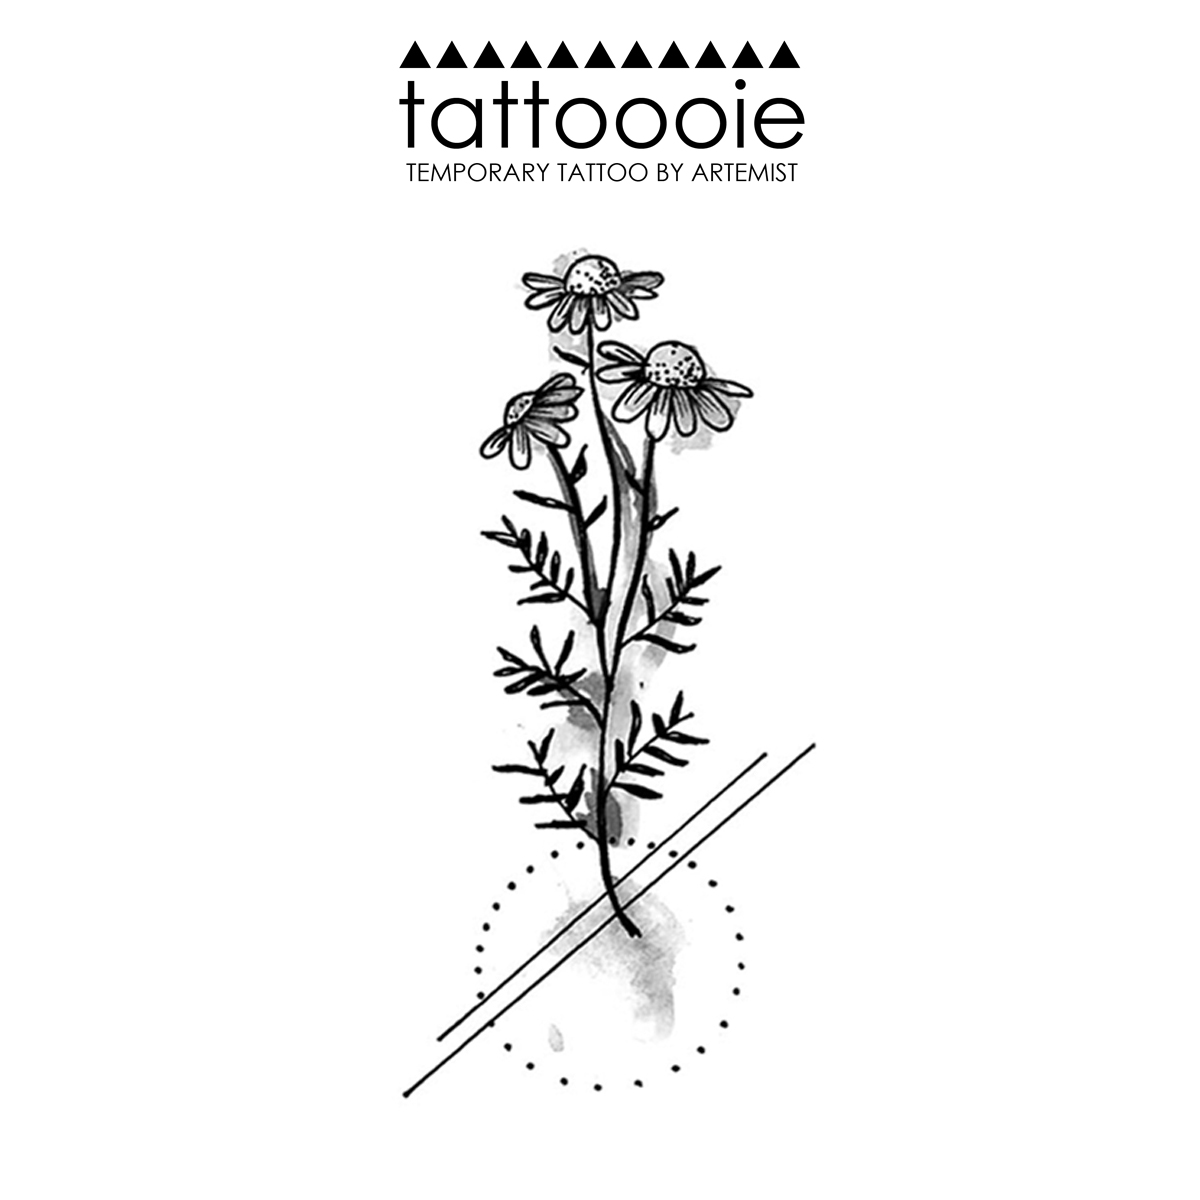 10 Intense and rewarding minimalist wildflower tattoos for women